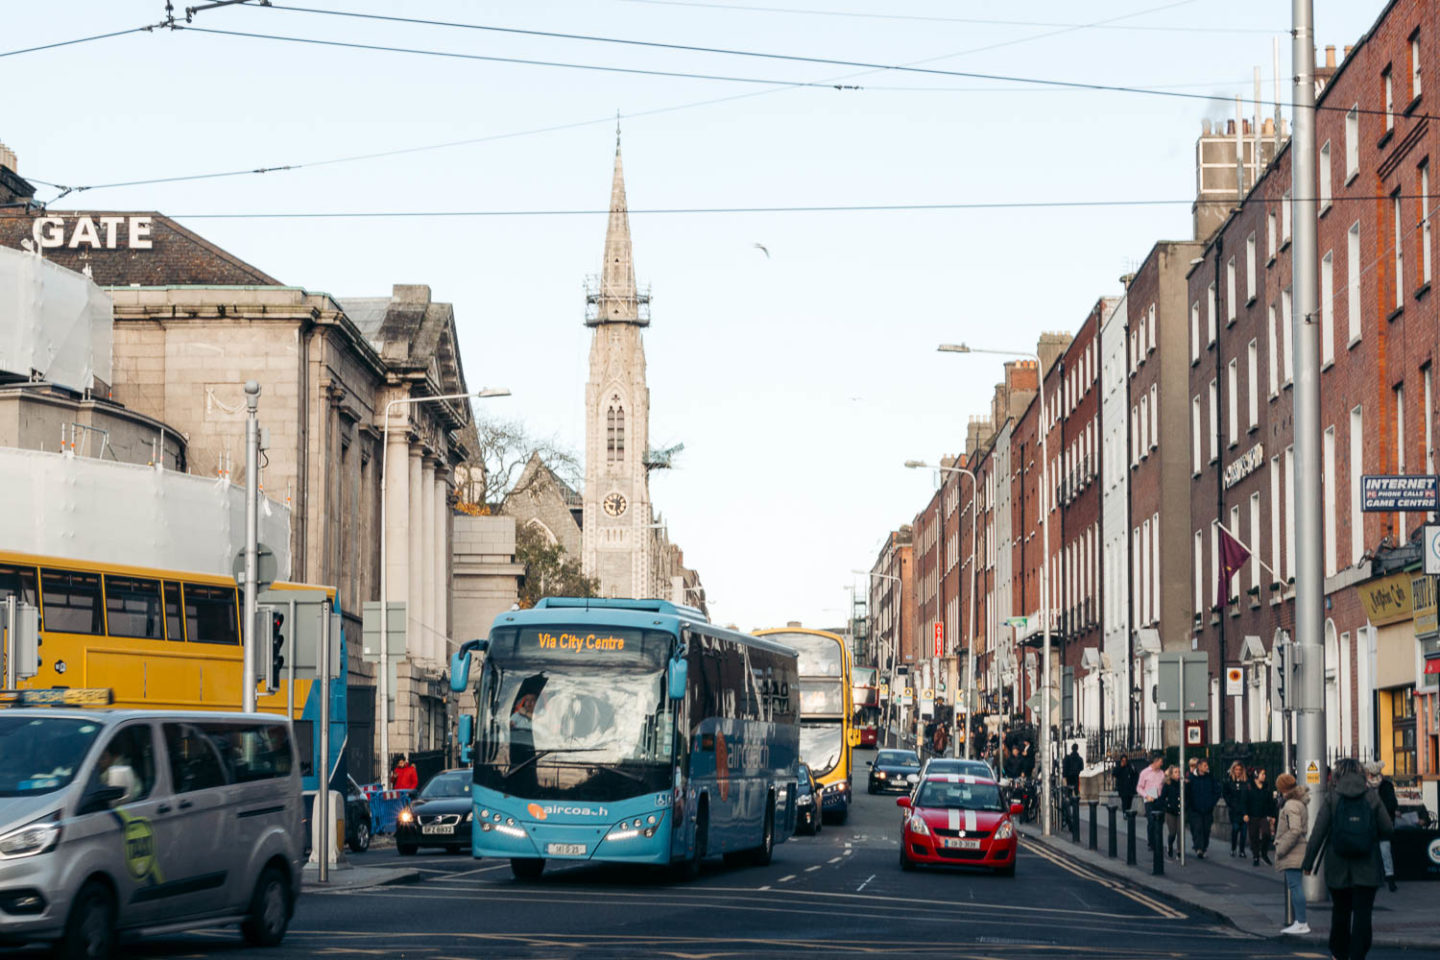 Dublin travel guide - Roads and Destinations